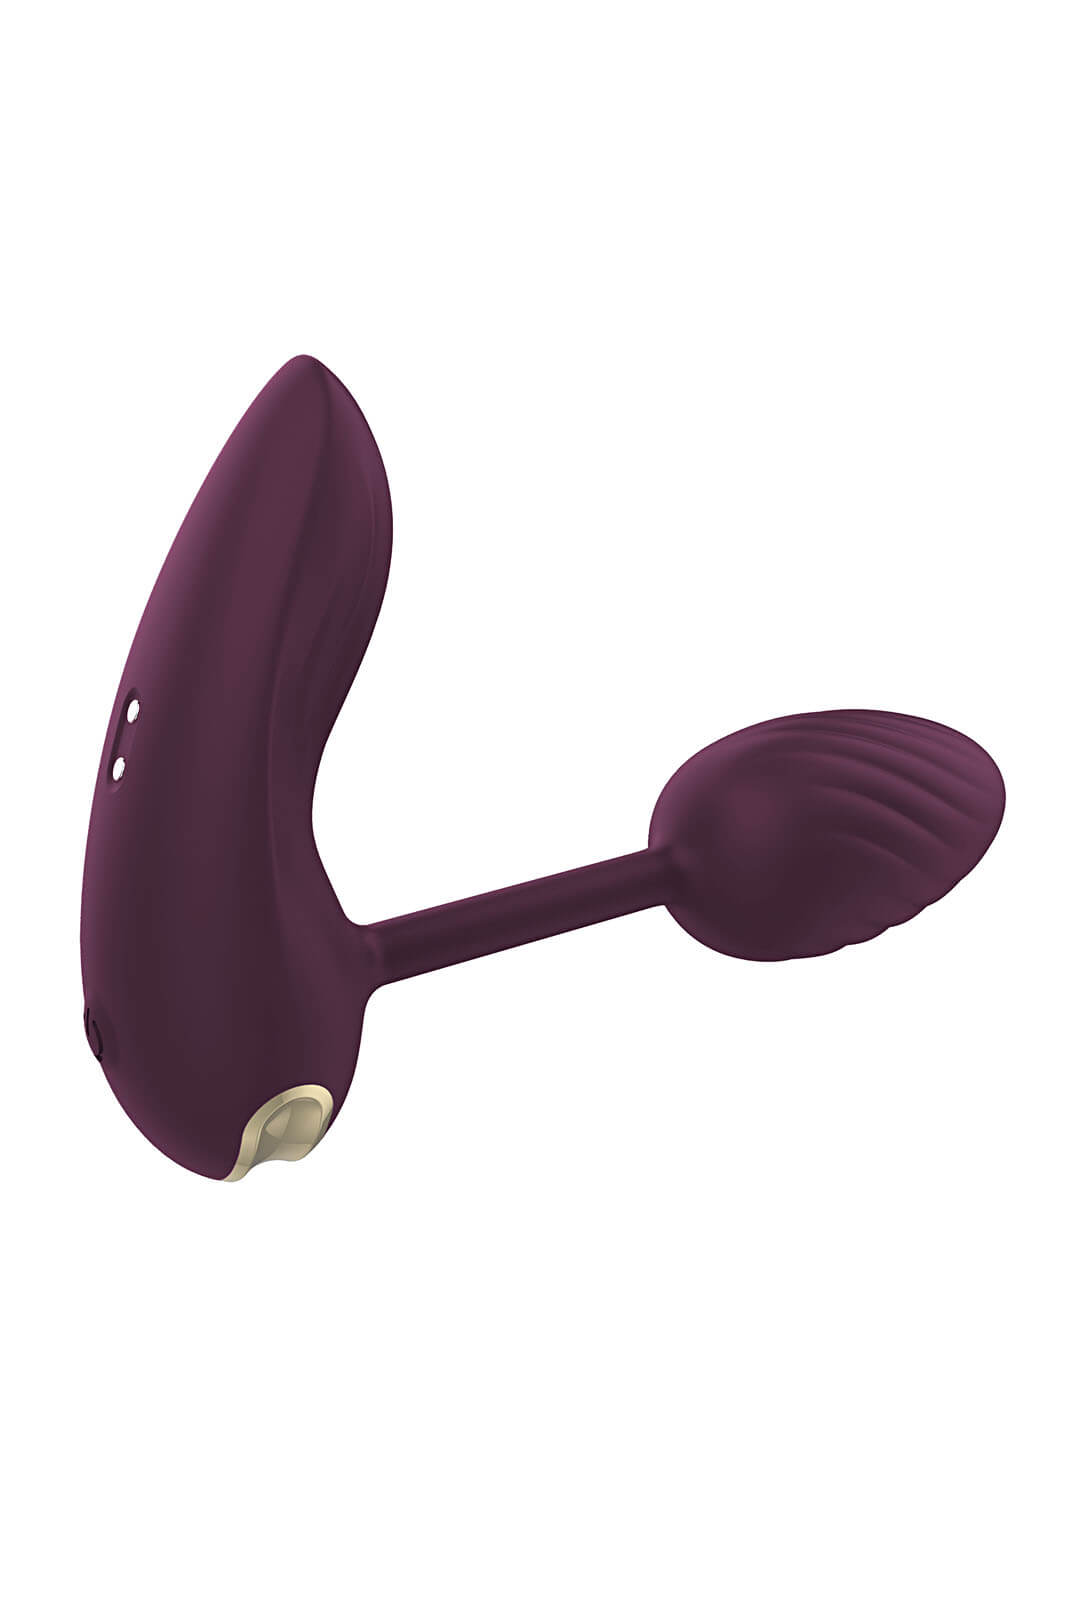 Dream Toys Essentials Wearable Egg Vibe (Purple), vaginální vajíčko